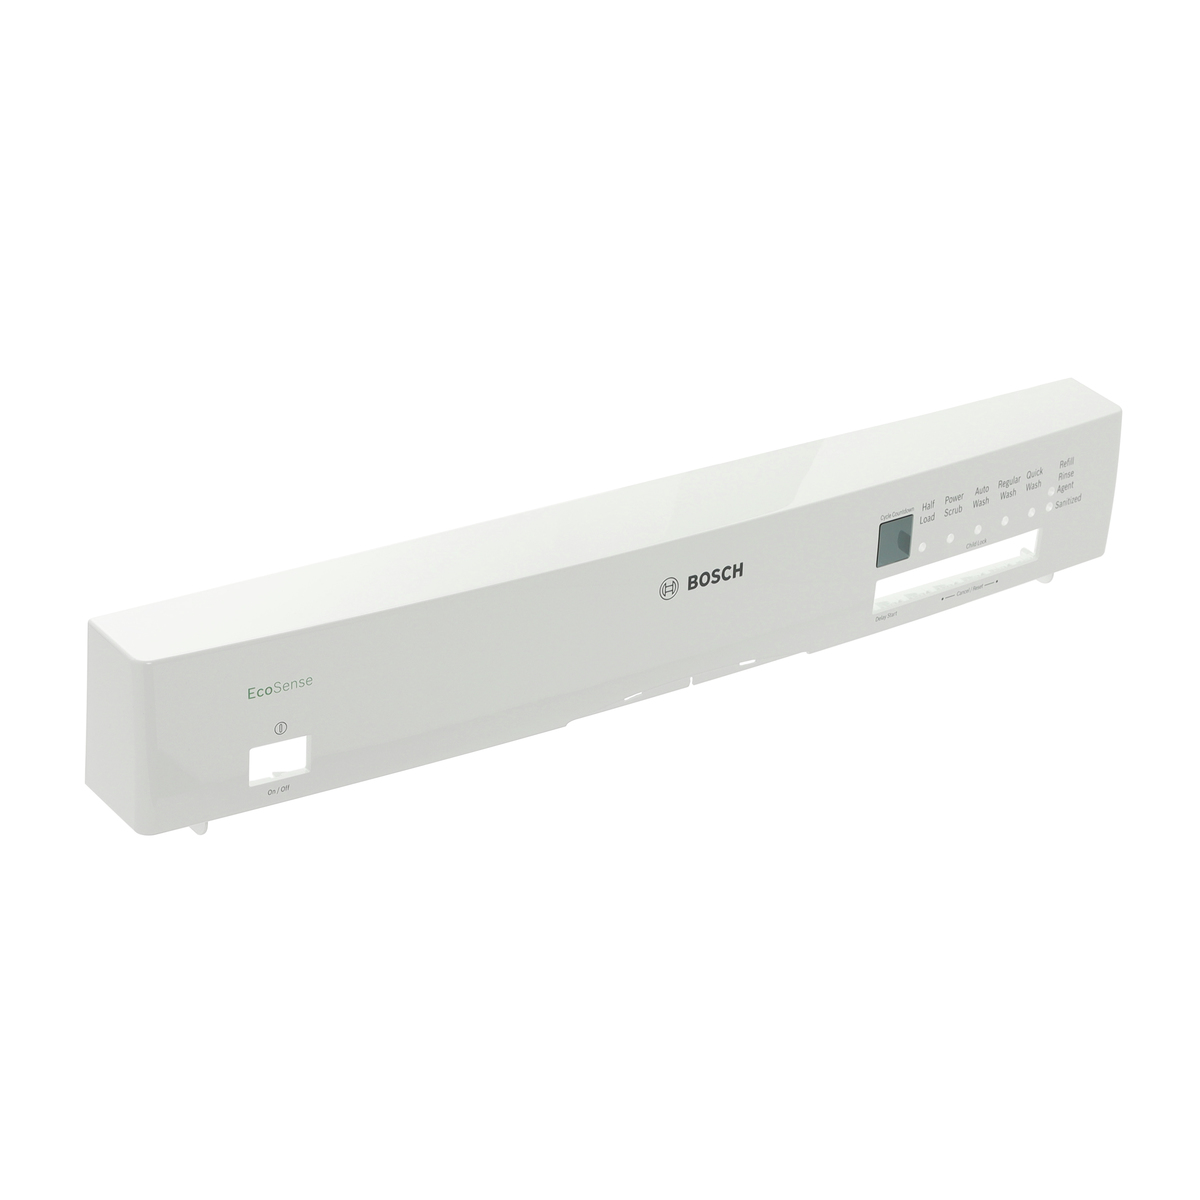 Bosch Dishwasher Panel-Facia – White. Part #00683956